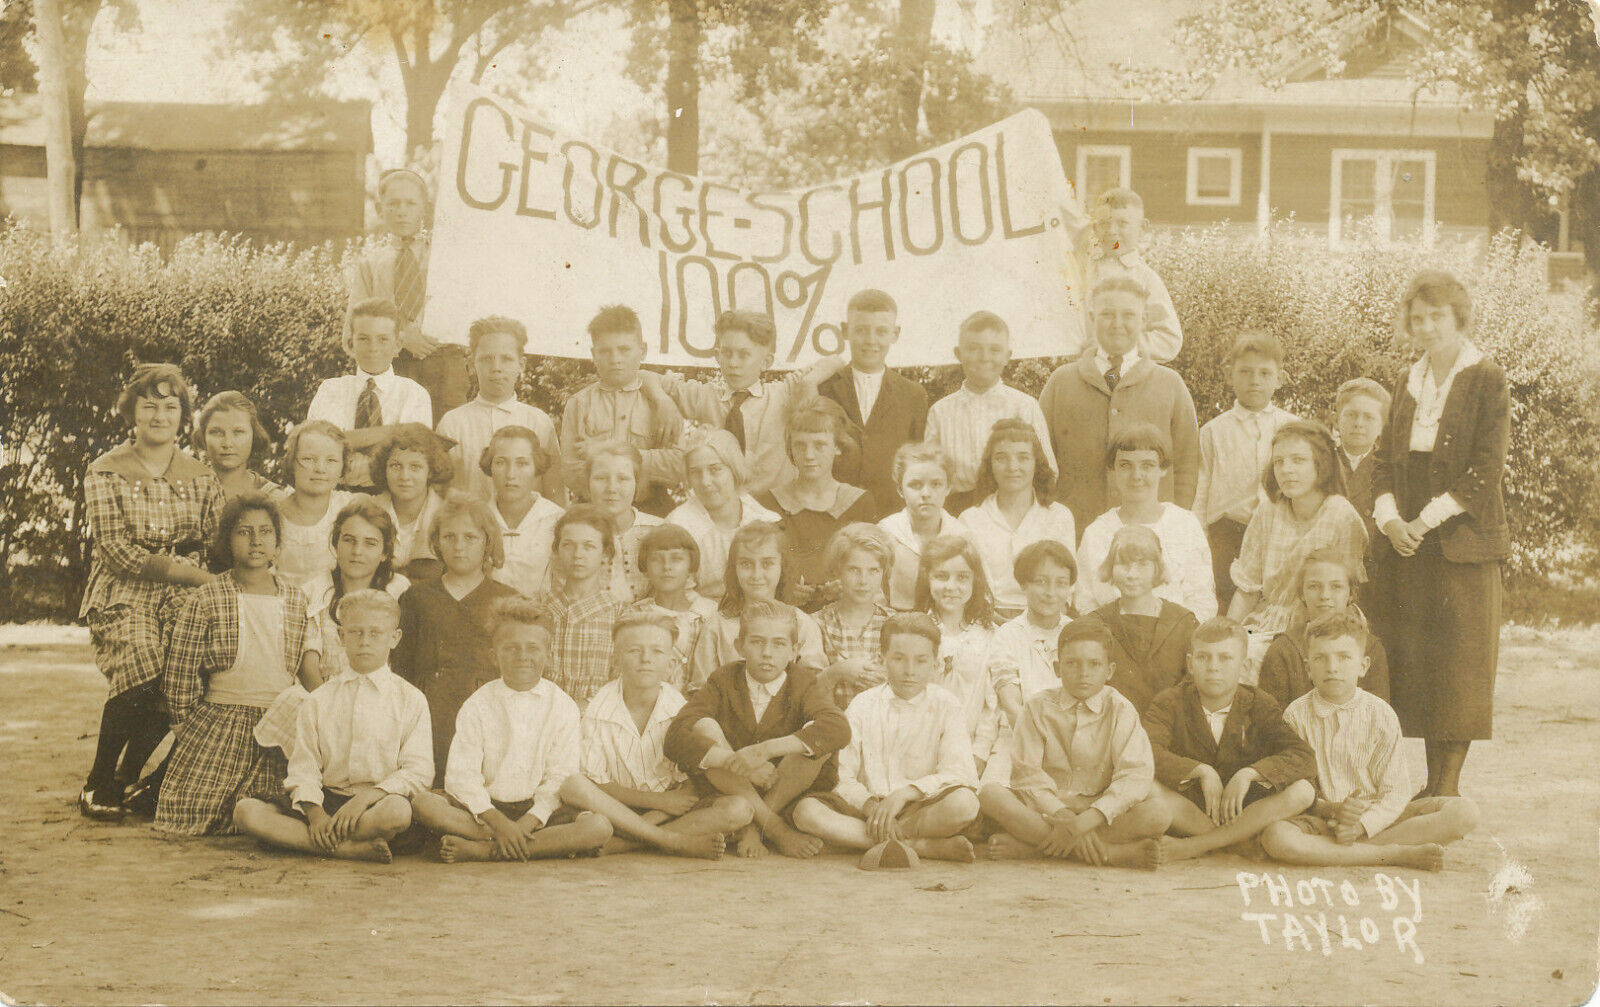 RPPC Real Photo Postcard George School. Photo by Taylor. Azo Stamp Box 1917